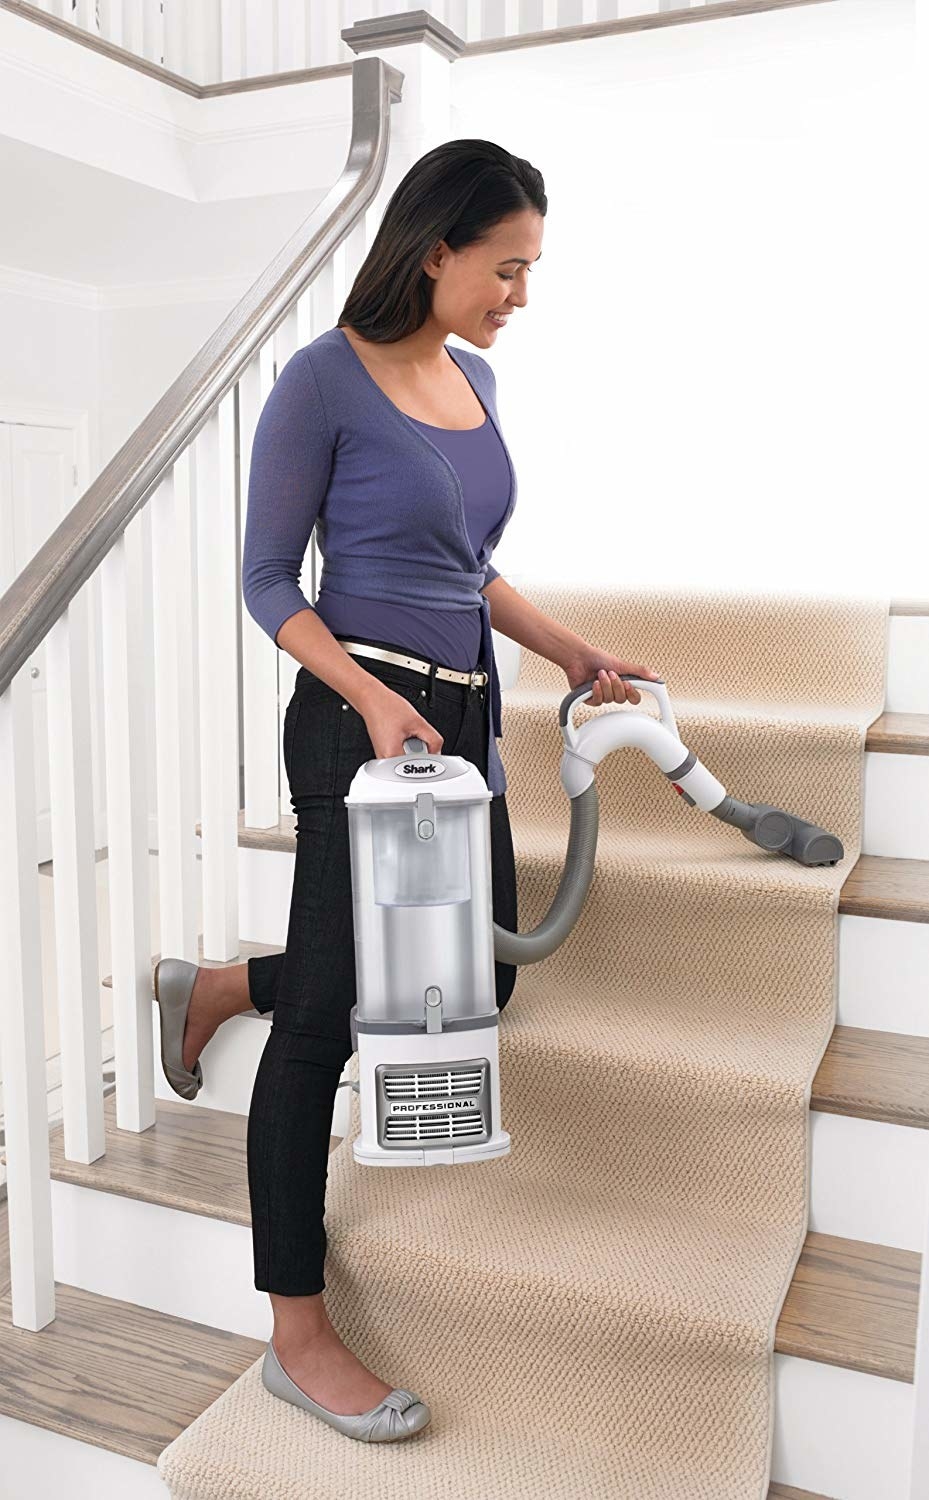 model using the vacuum on stair carpet